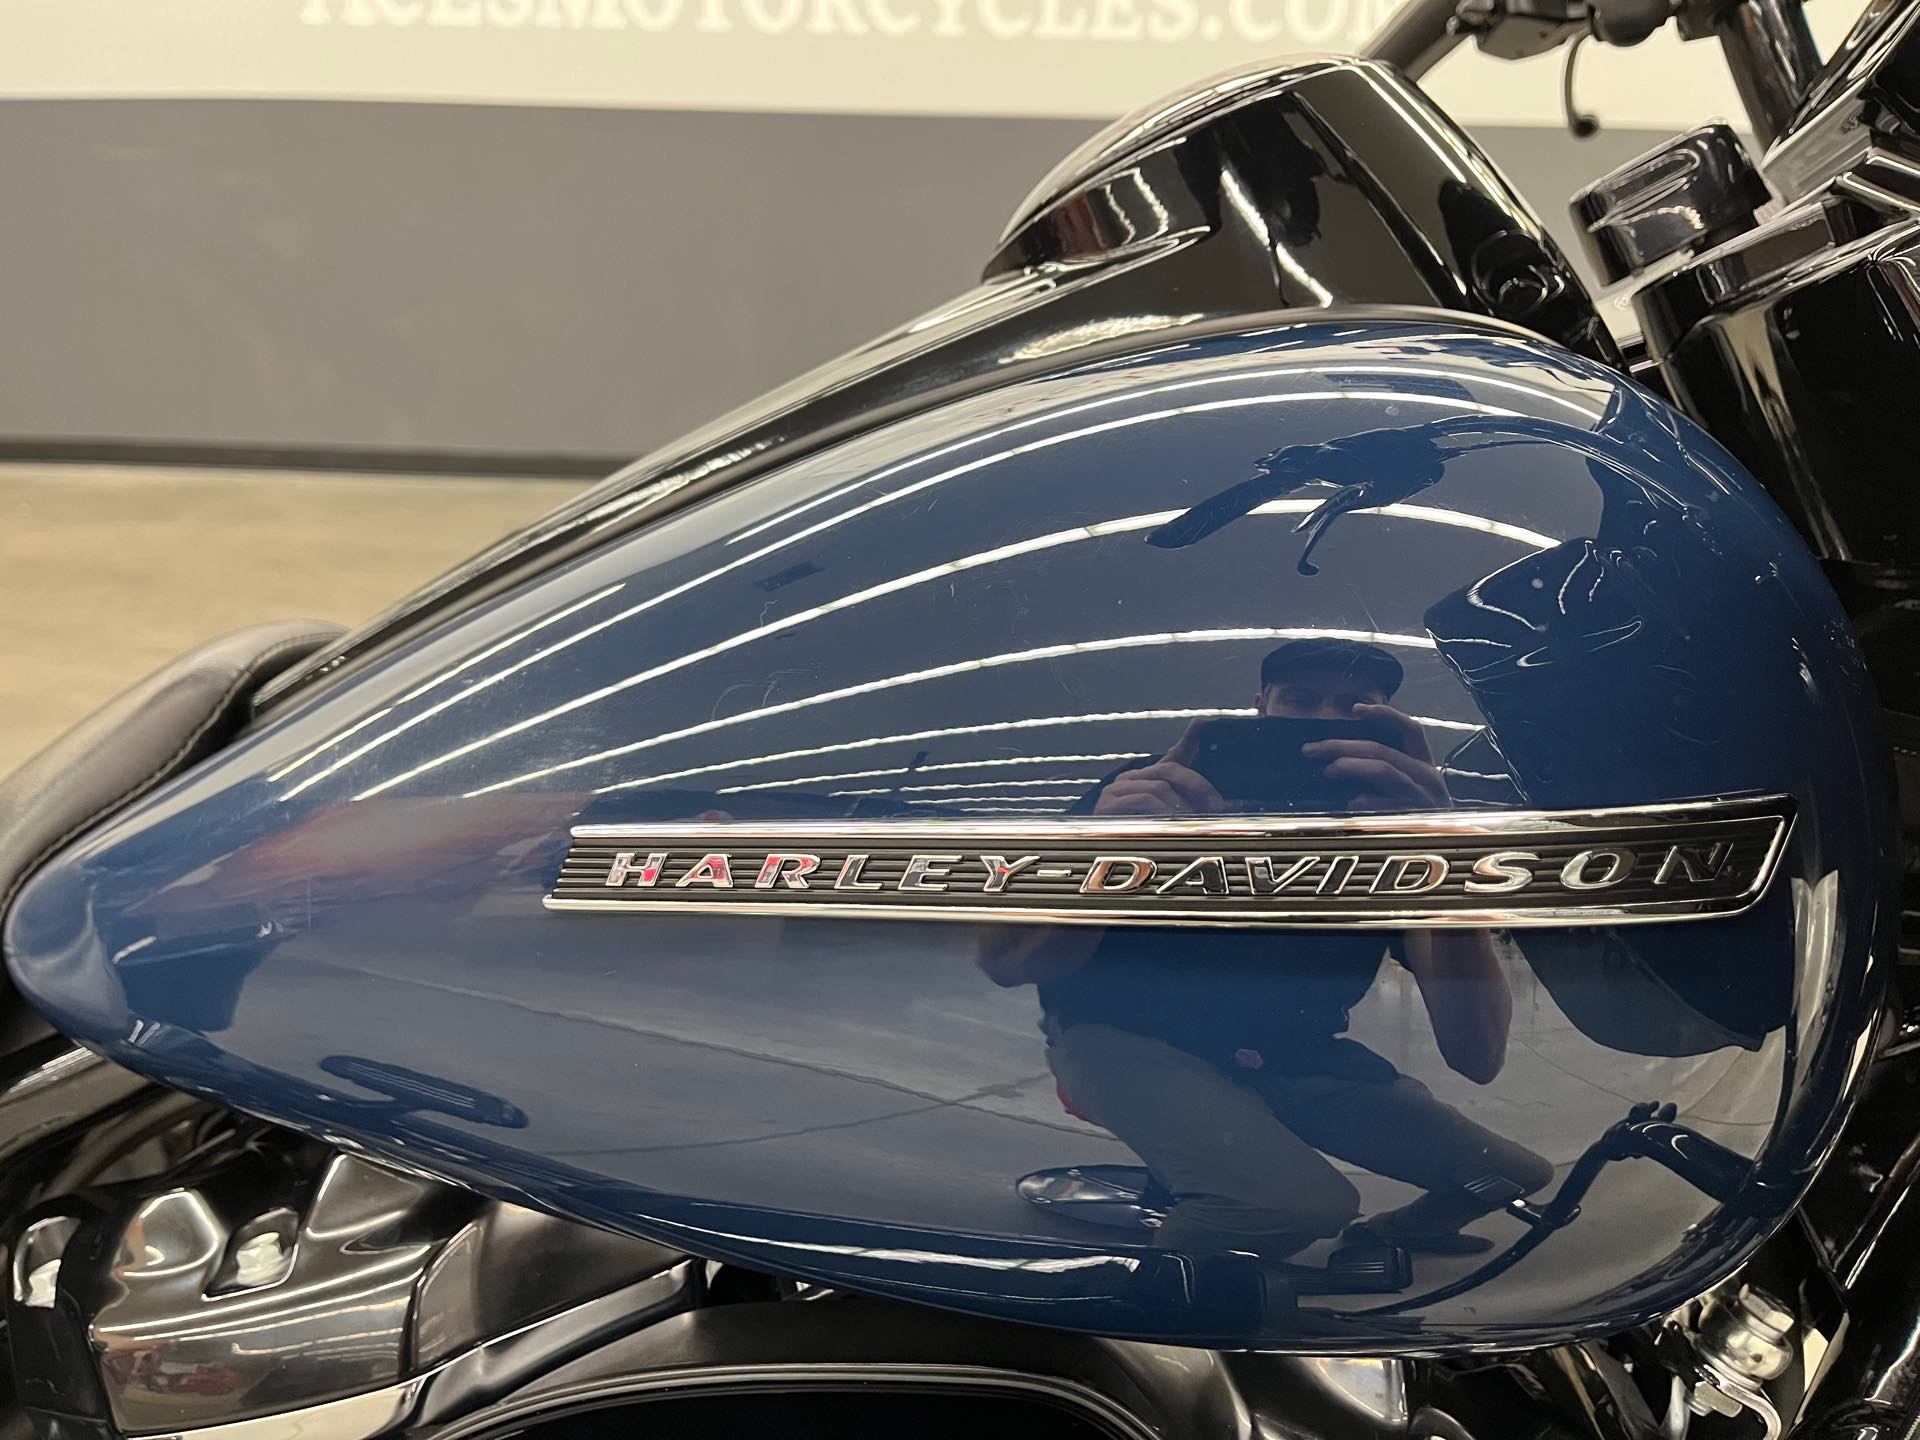 2019 Harley-Davidson Road Glide Special at Aces Motorcycles - Denver